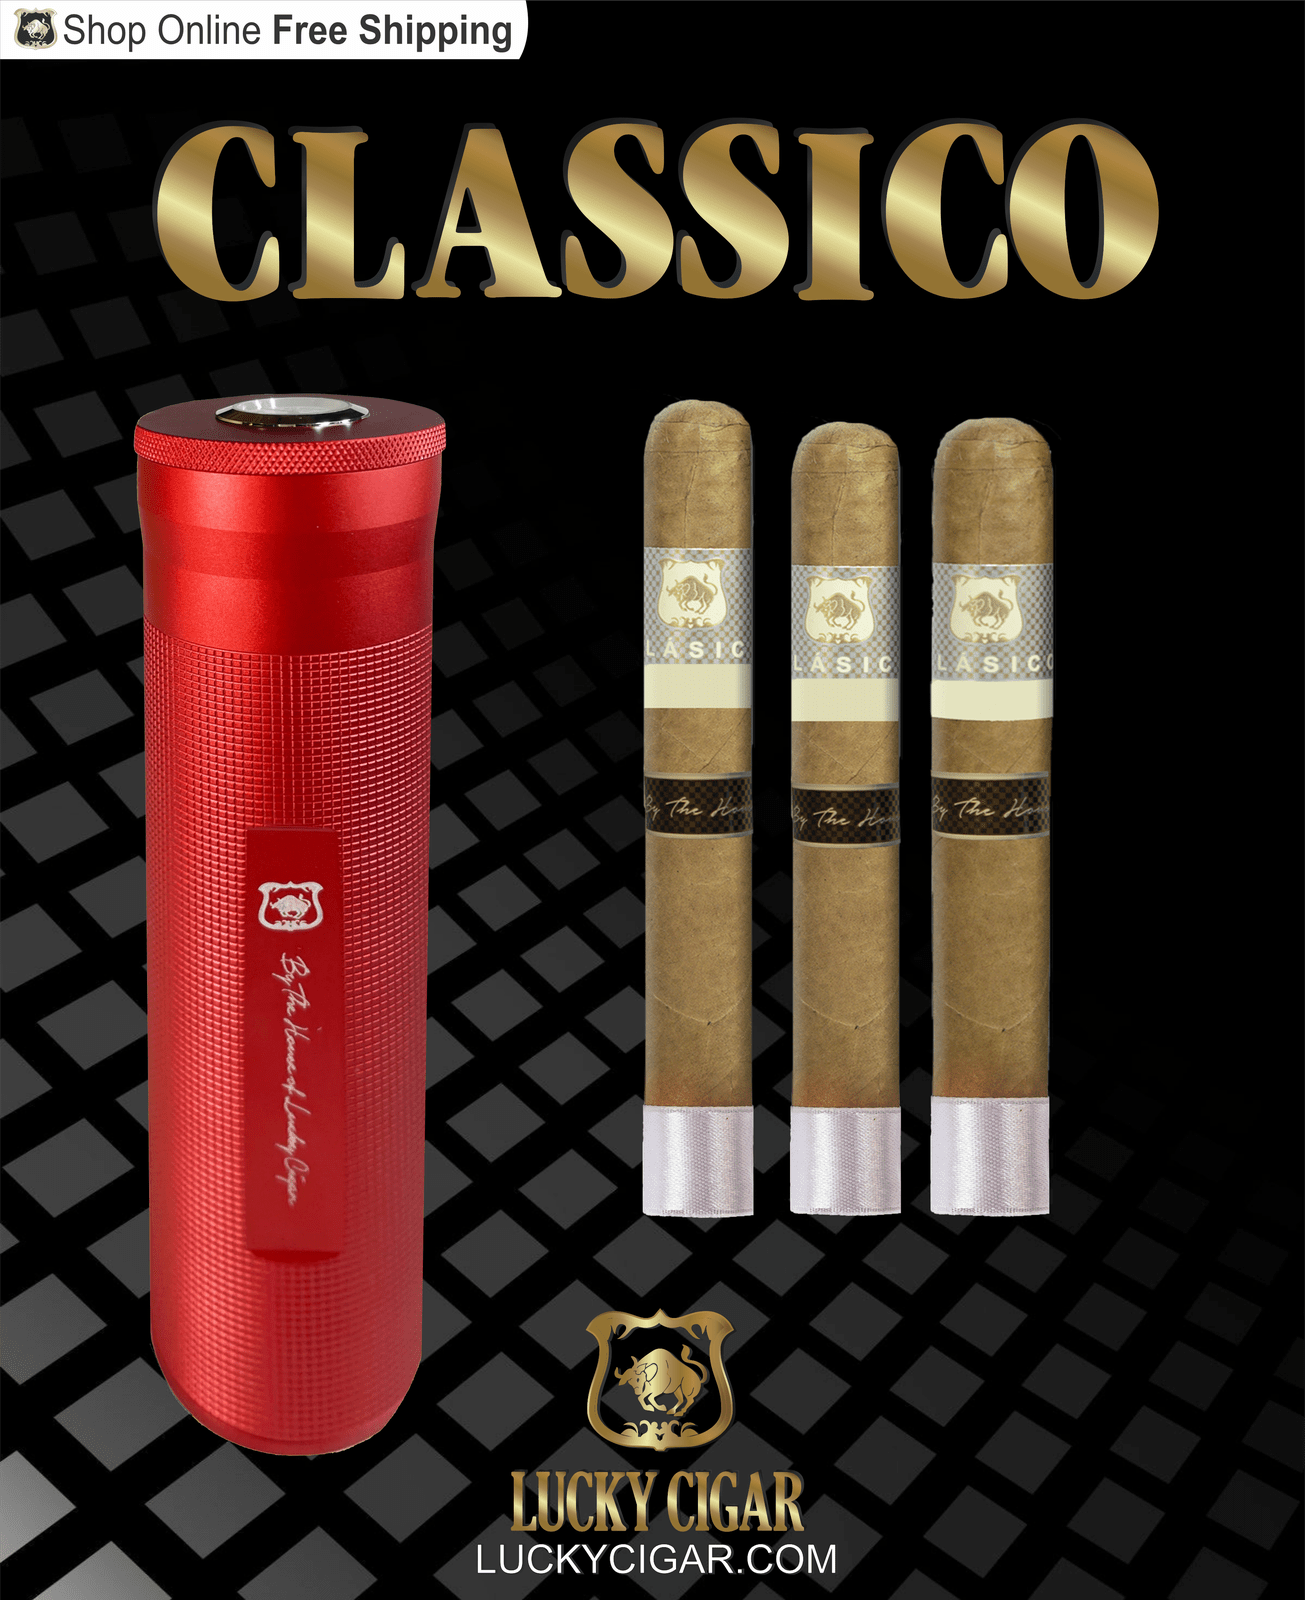 Lucky Cigar Sampler Sets: Set of 3 Classico Robusto Cigars with Travel Humidor Tube